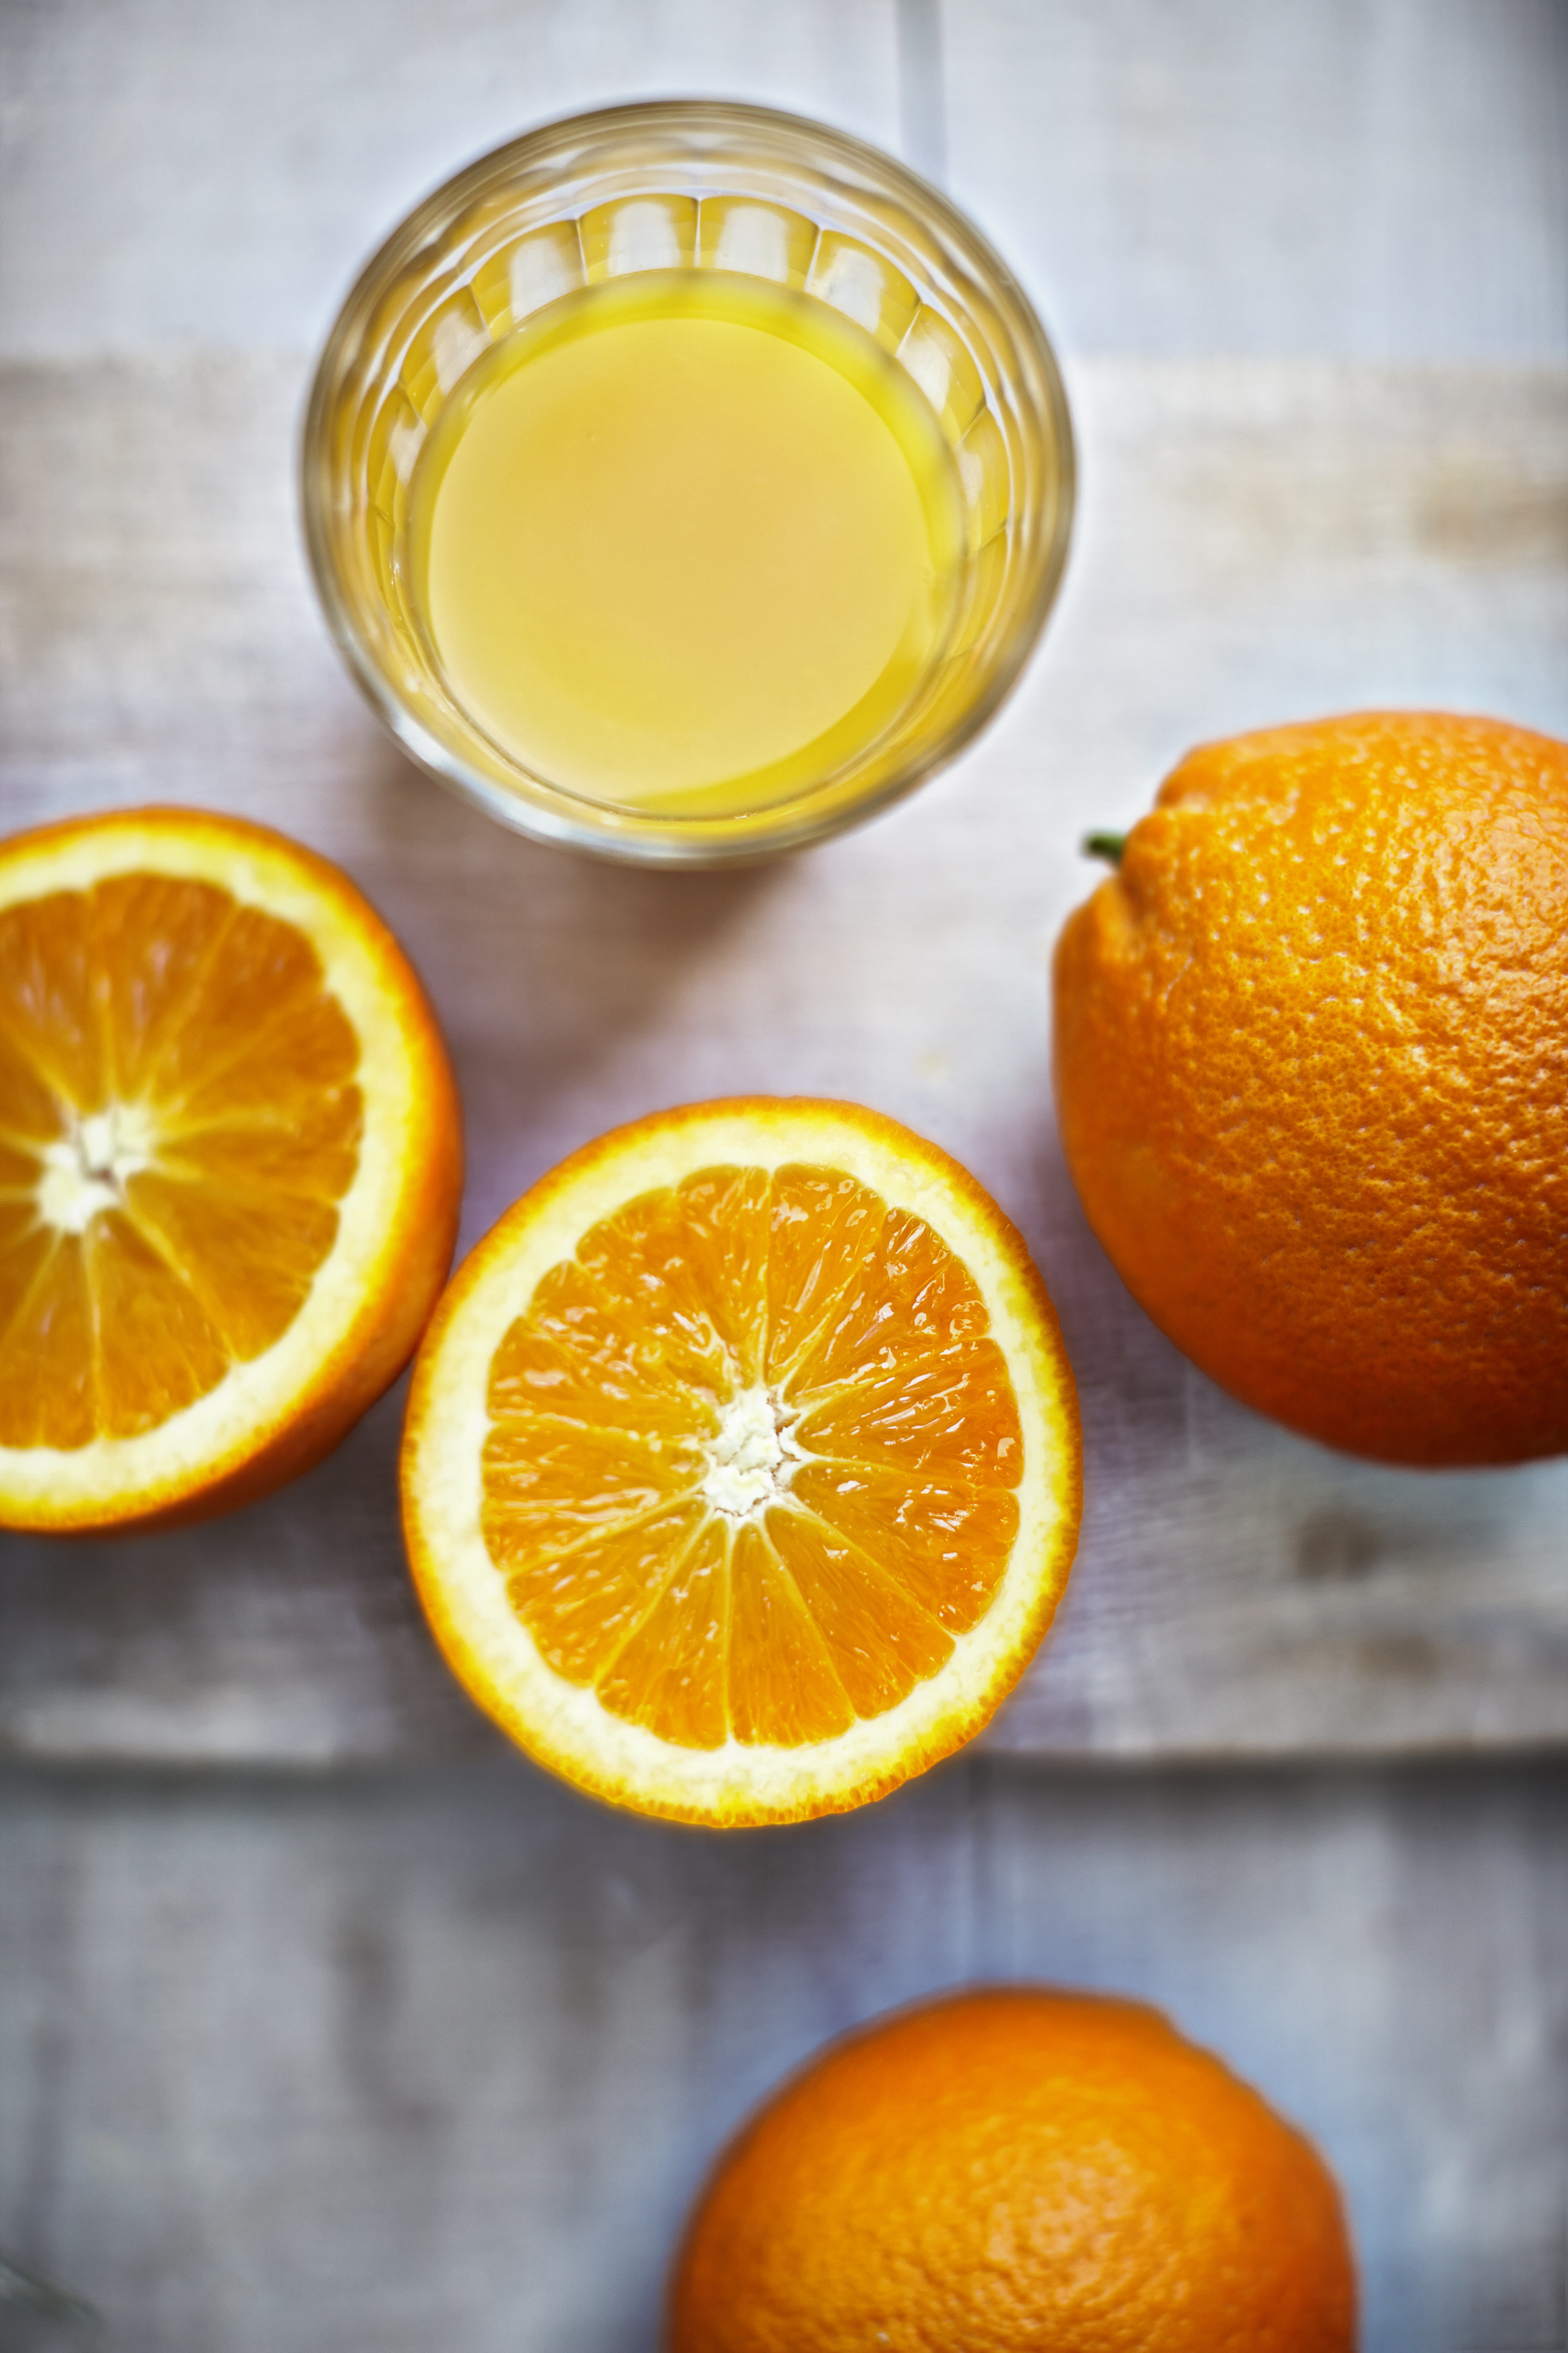 pulp orange juice